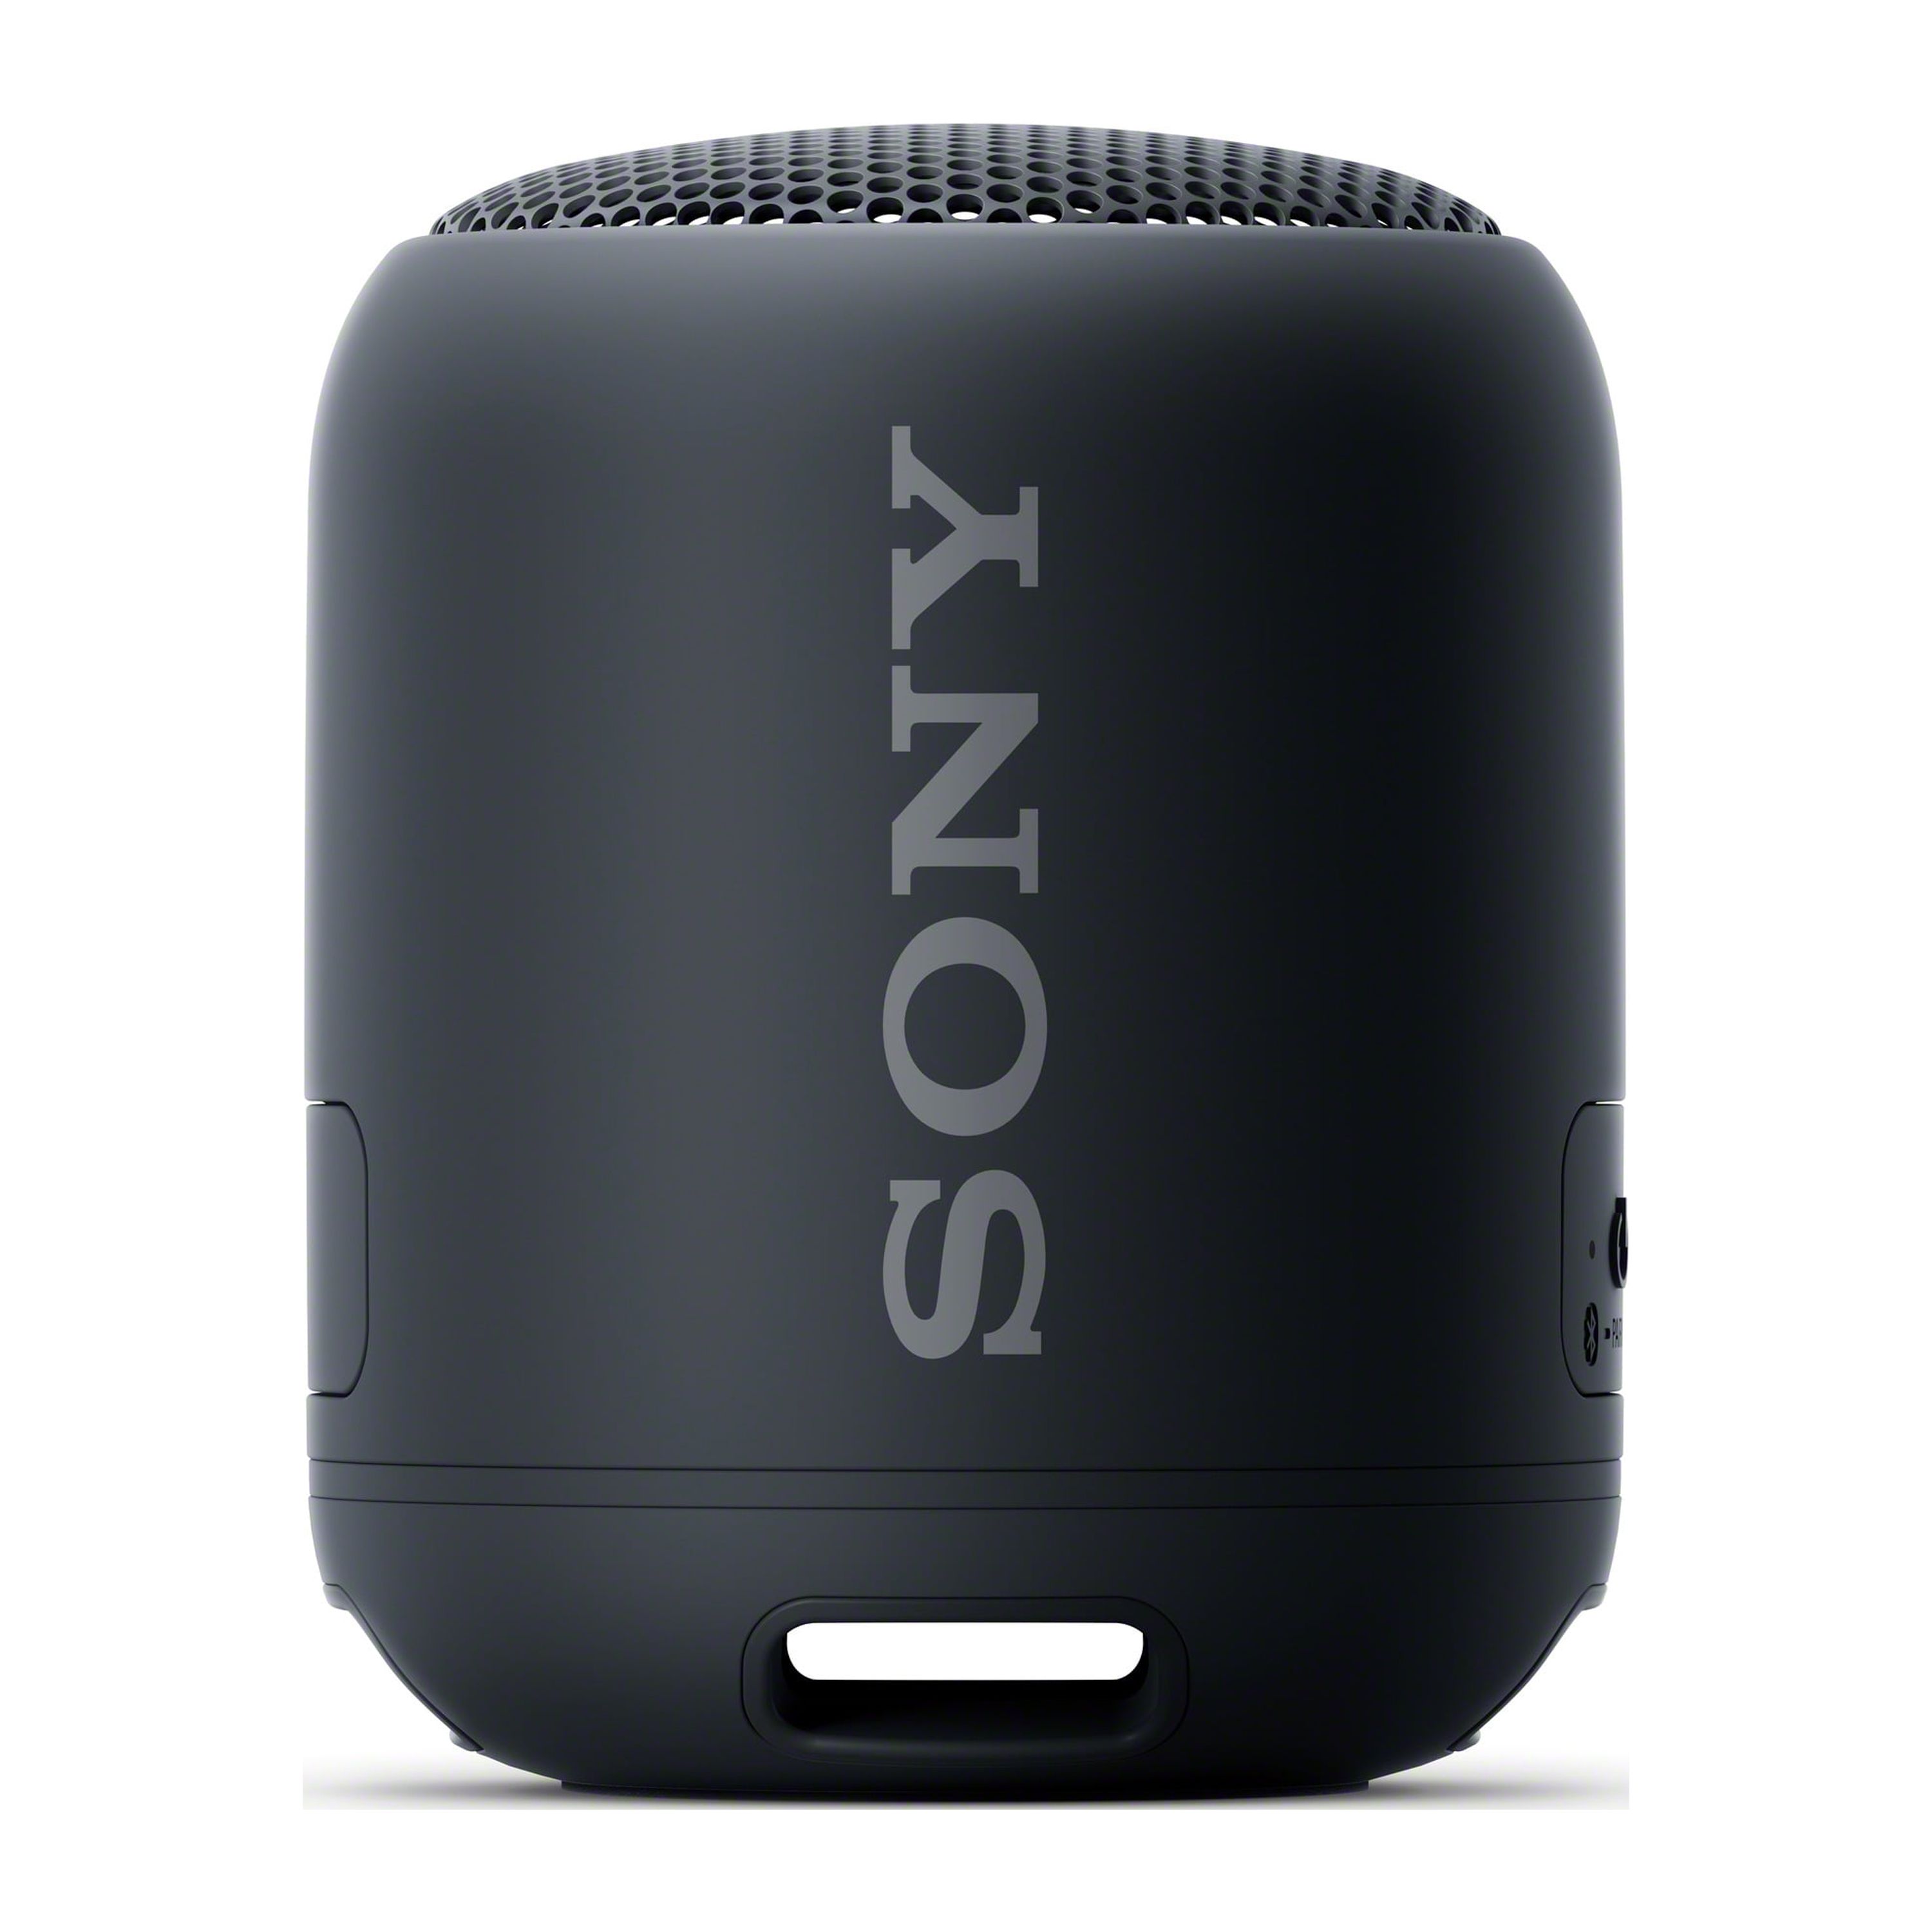 Sony Portable Bluetooth Speaker, Black, SRSXB12/BMC4 - image 1 of 7